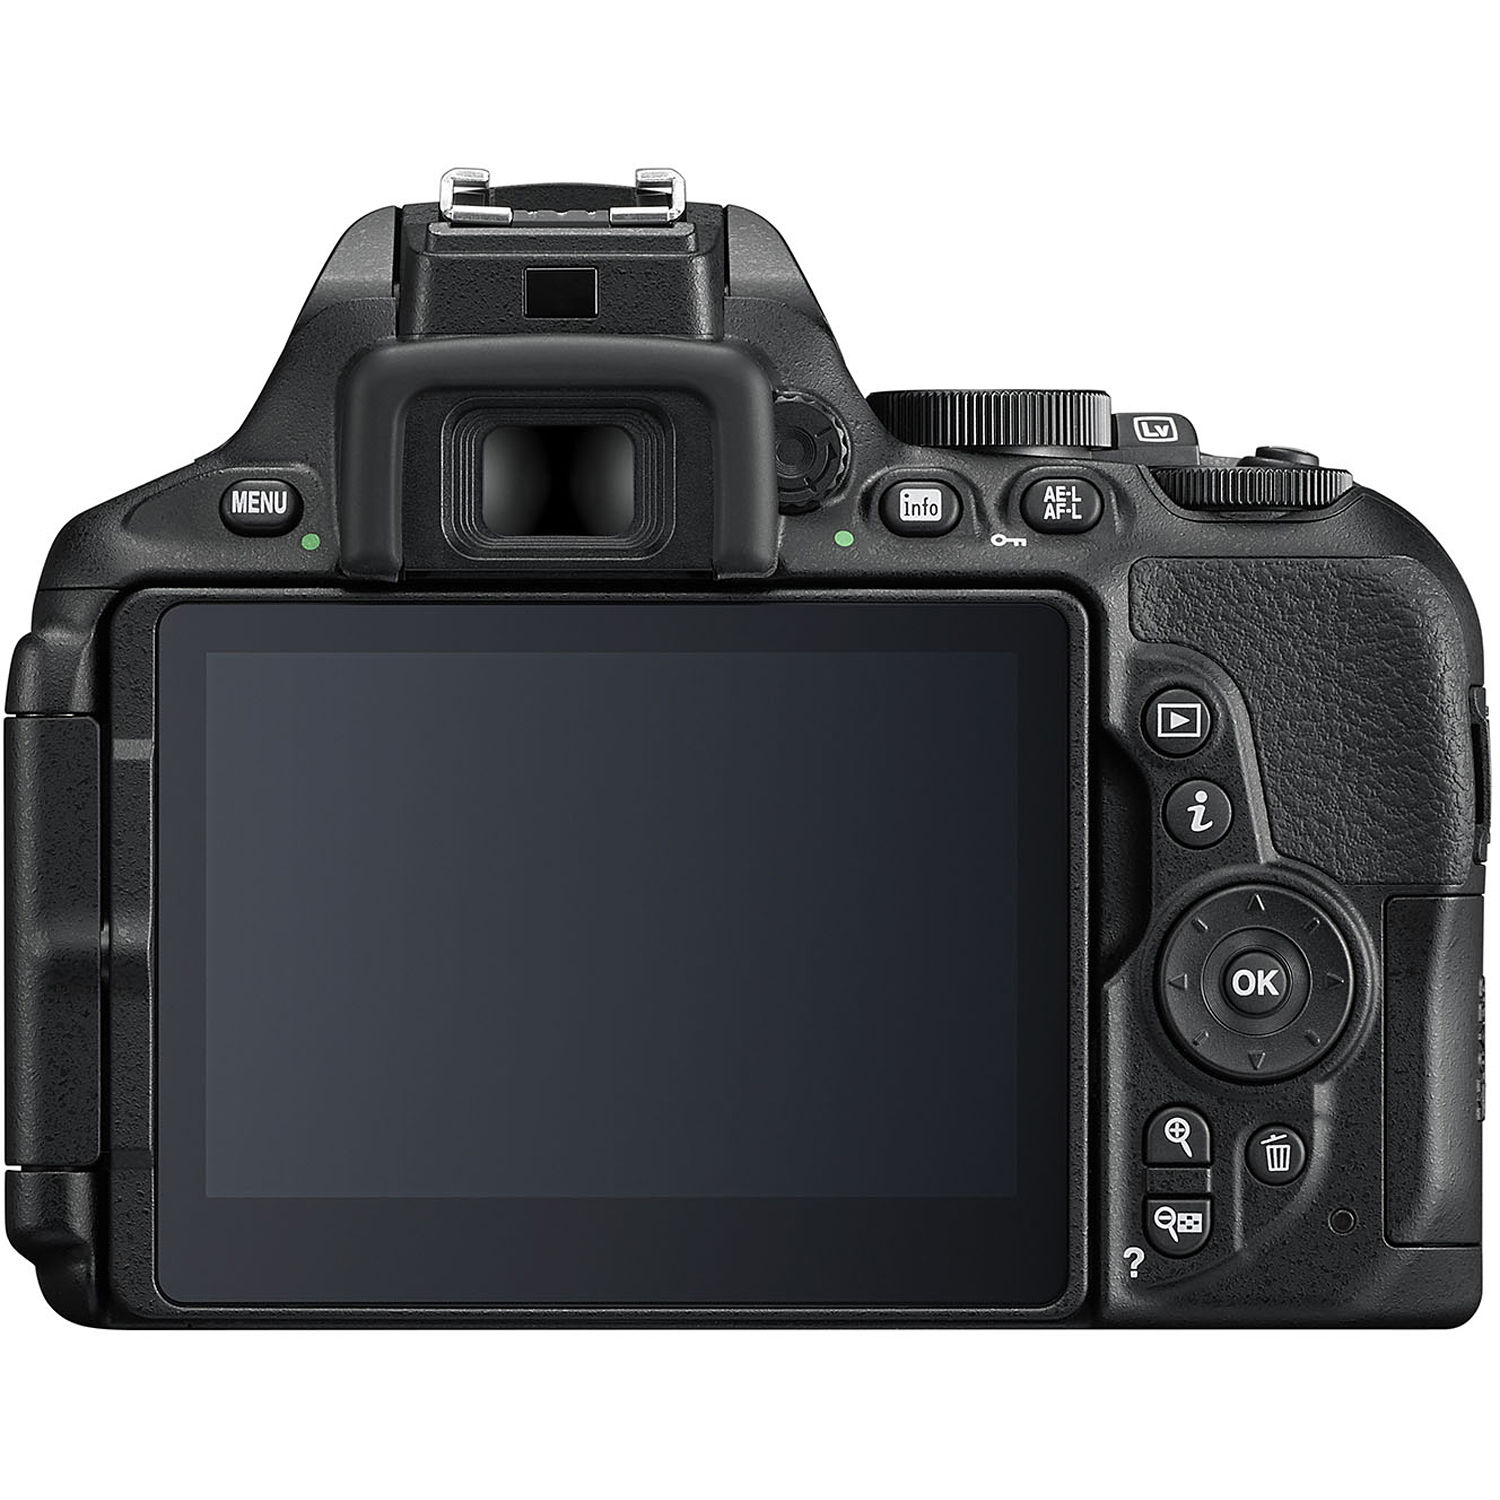 Nikon D5600 24.2 MP DX-format Digital SLR Body Black - image 2 of 9